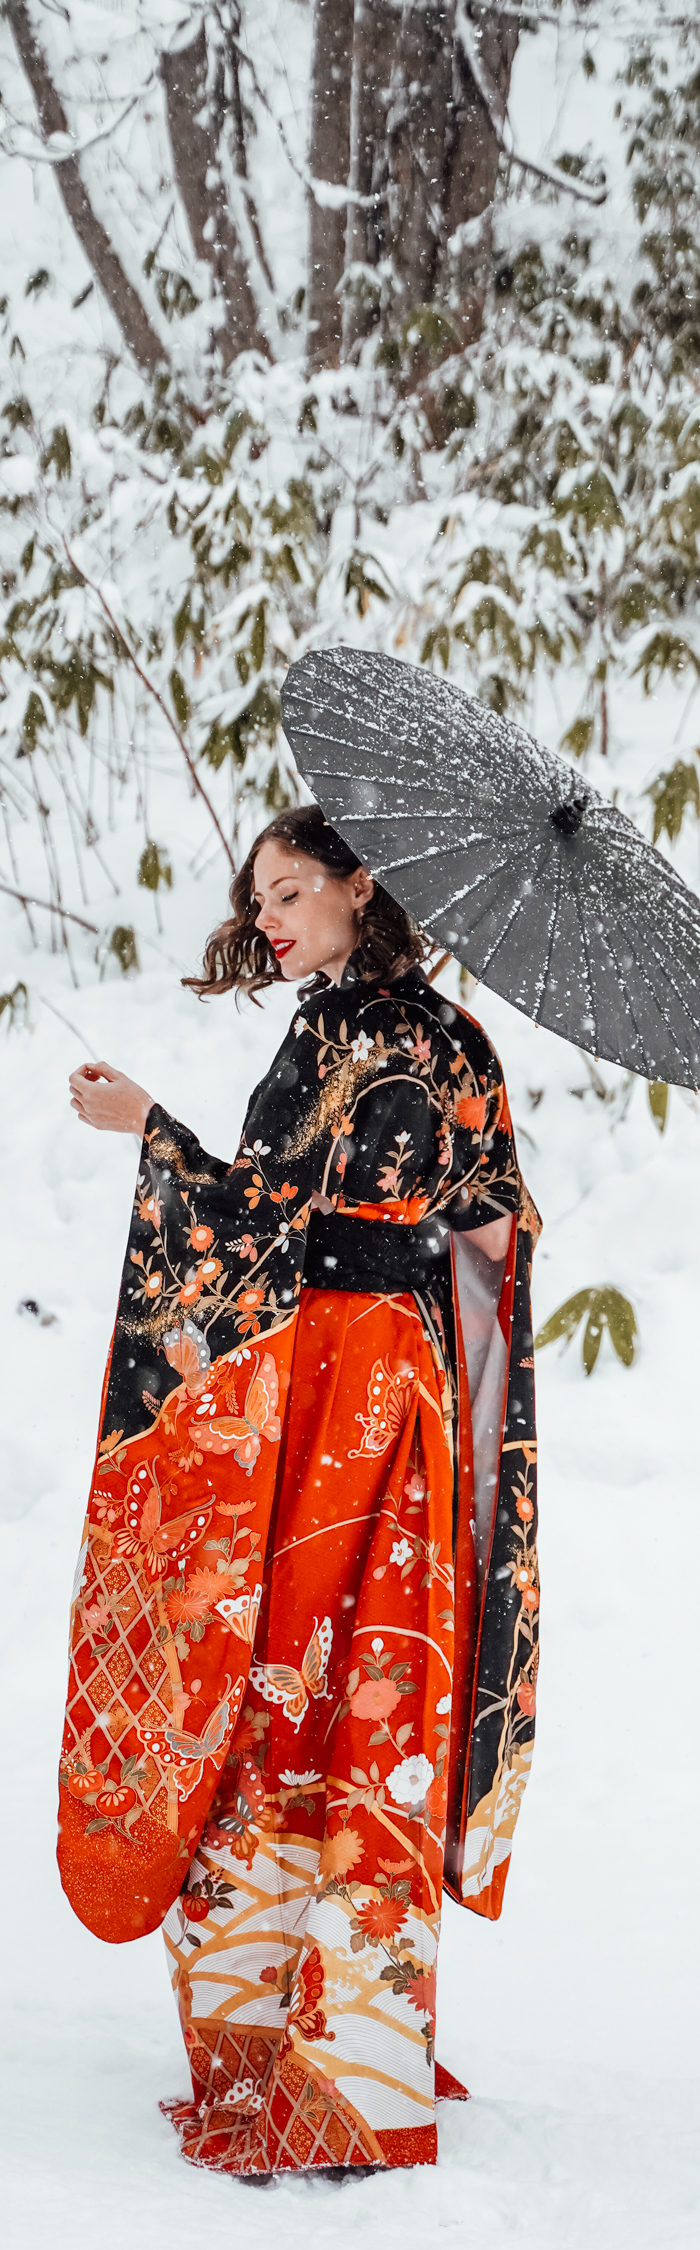 Alyssa Campanella of The A List blog wears a Japanese kimono furisode in Hokkaido, Japan